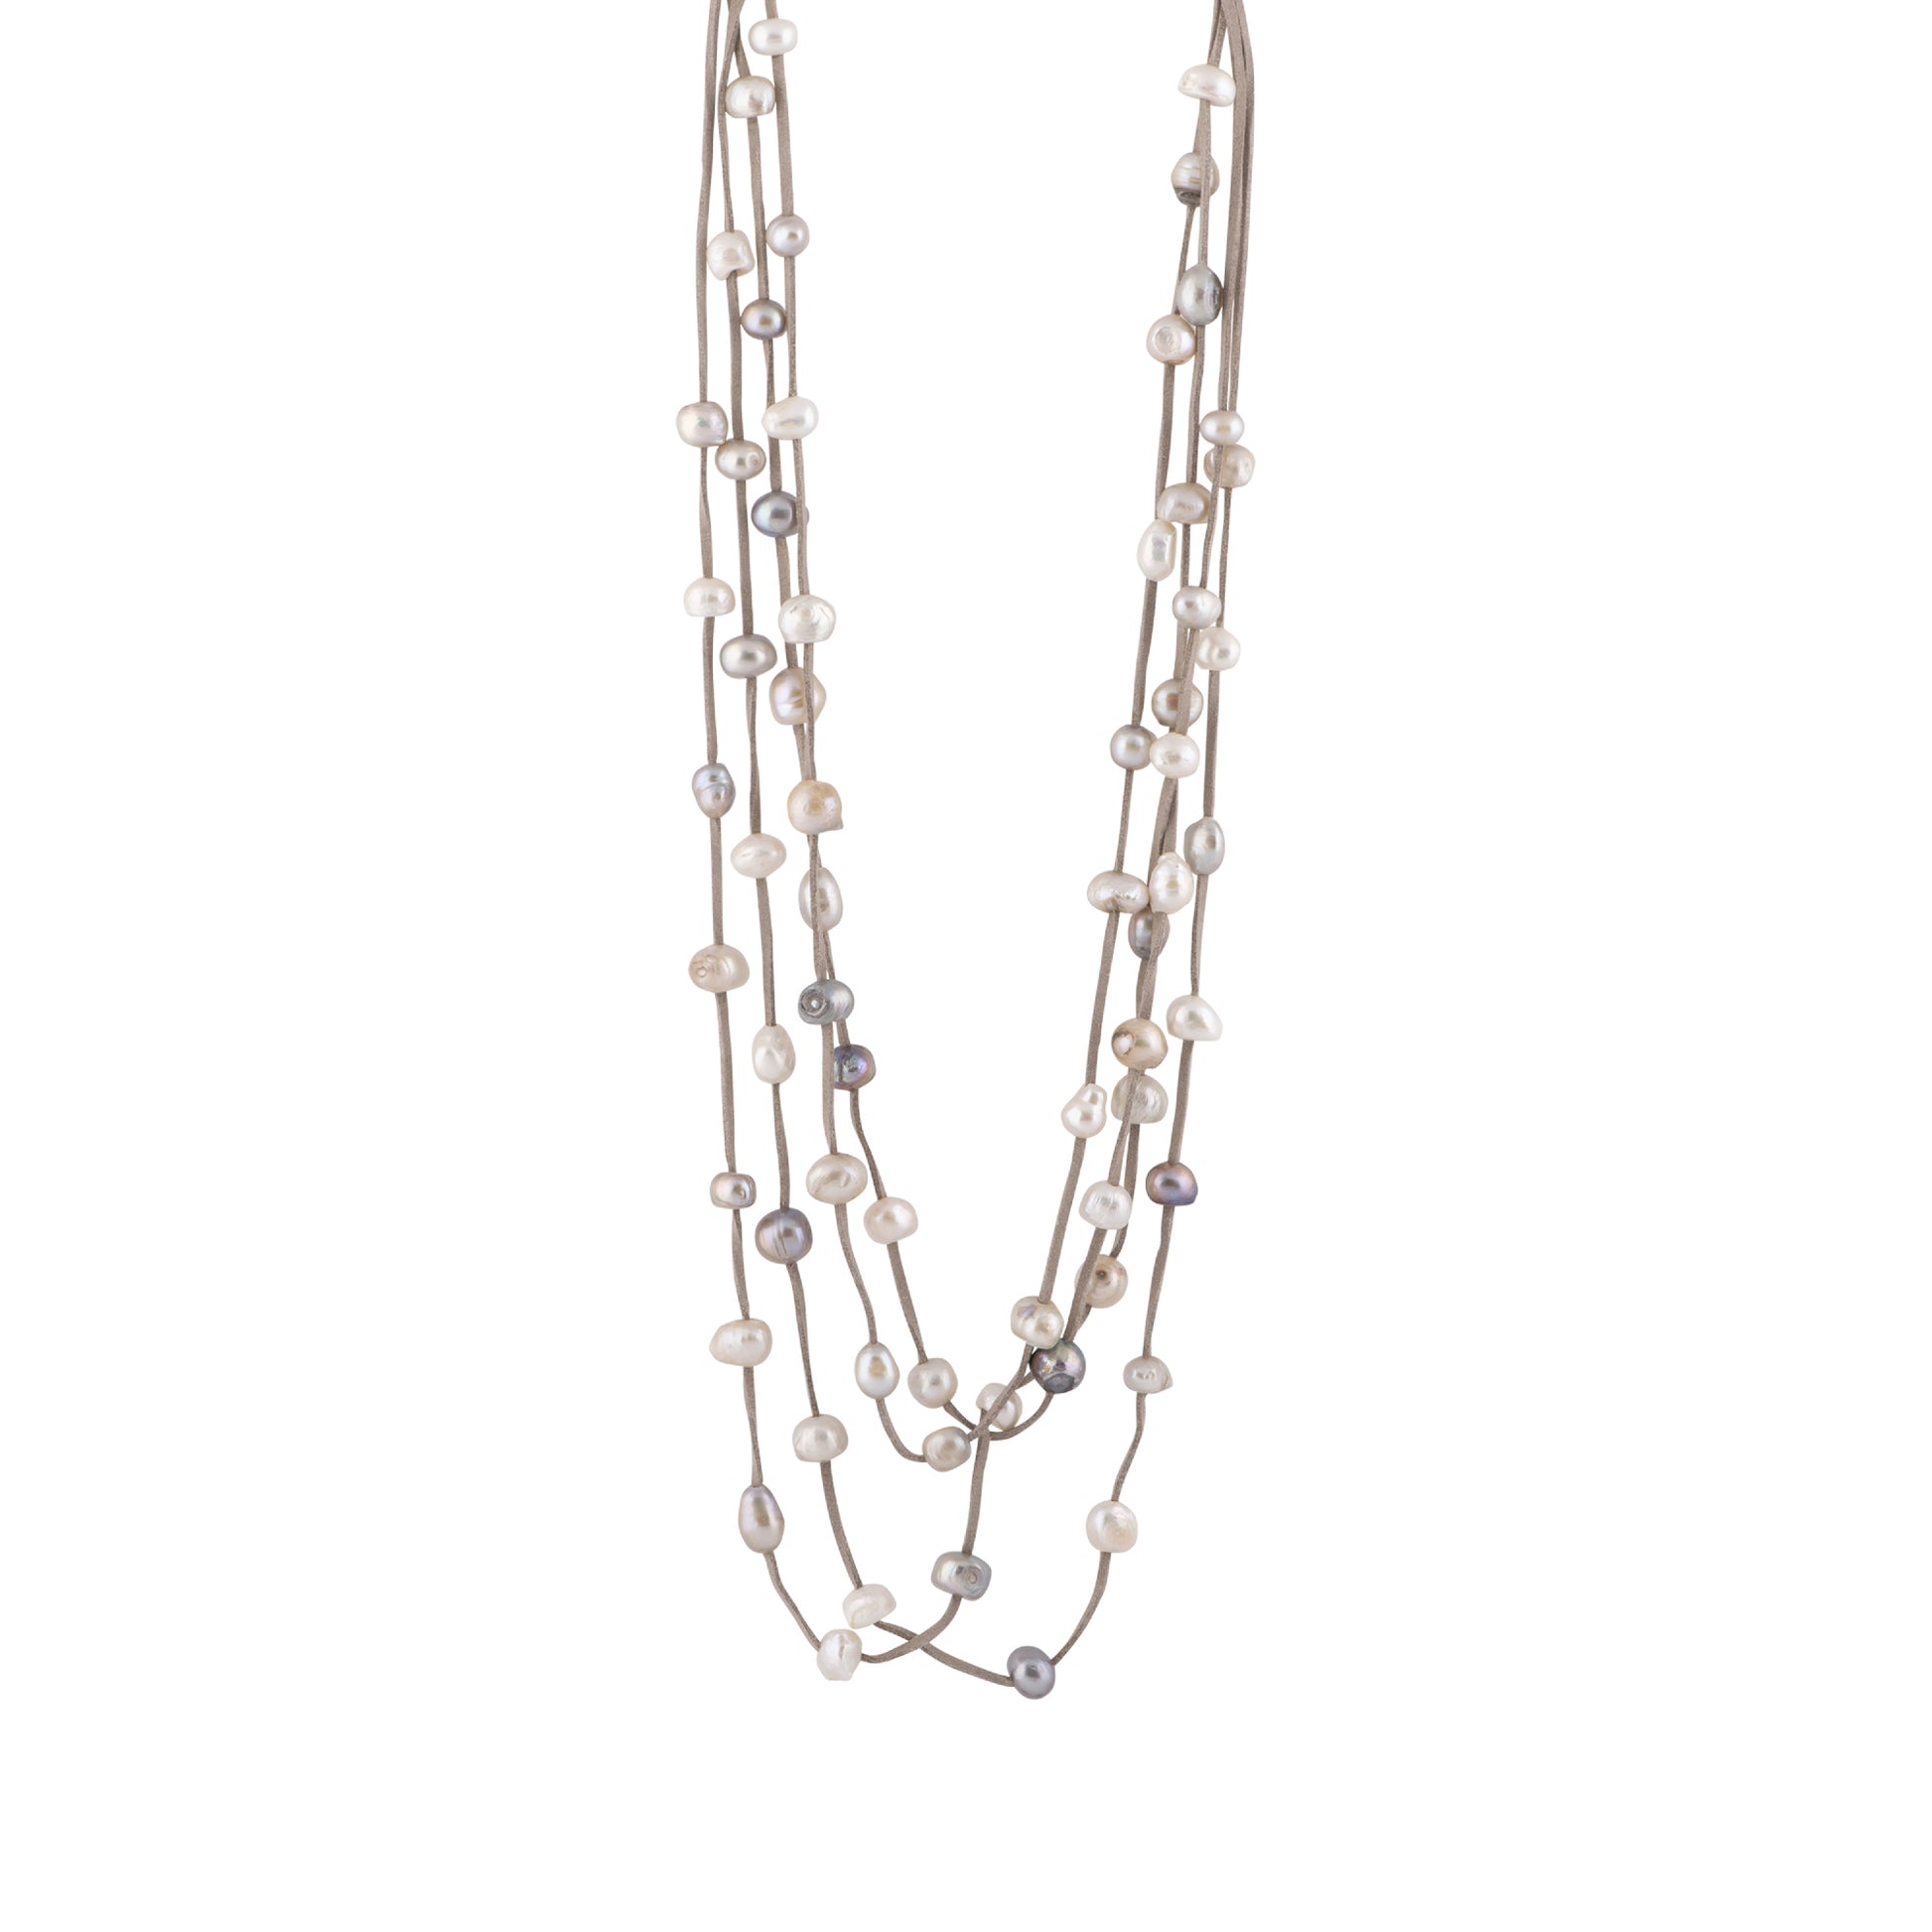 Julie - Multi strand suede necklace with pearls (Grey suede, multicolor pearls)